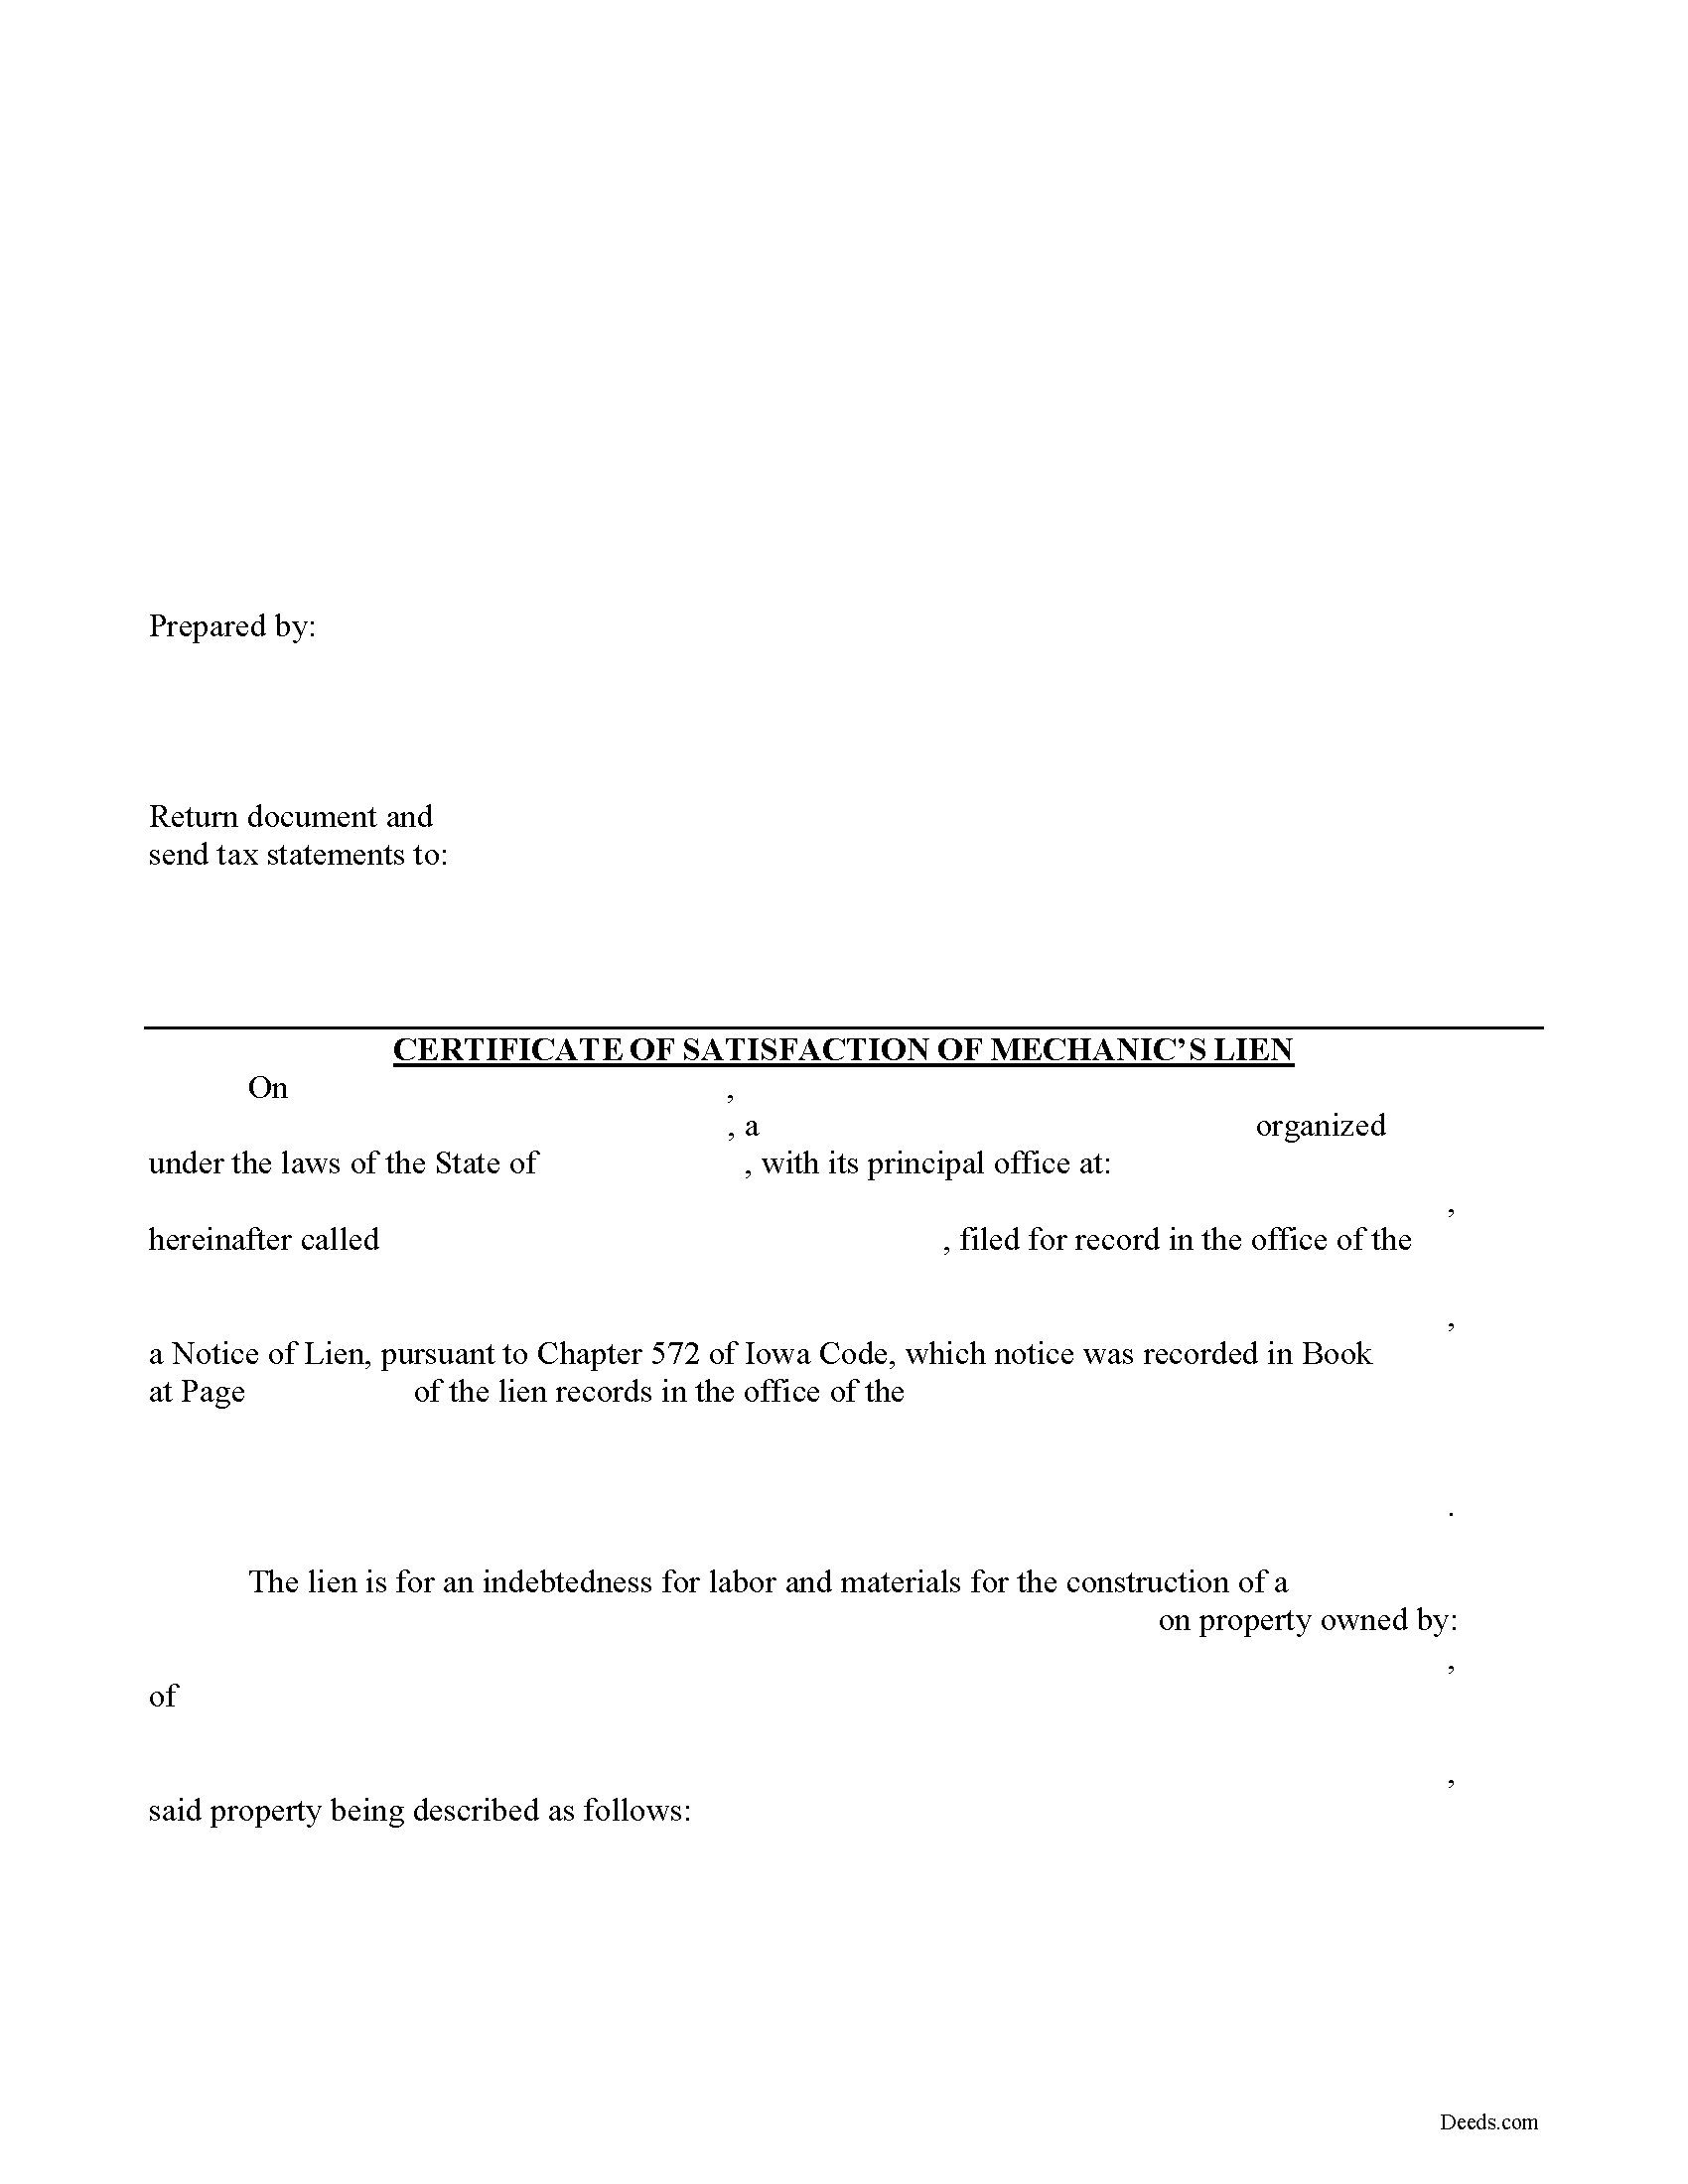 Iowa Certificate of Satisfaction Image